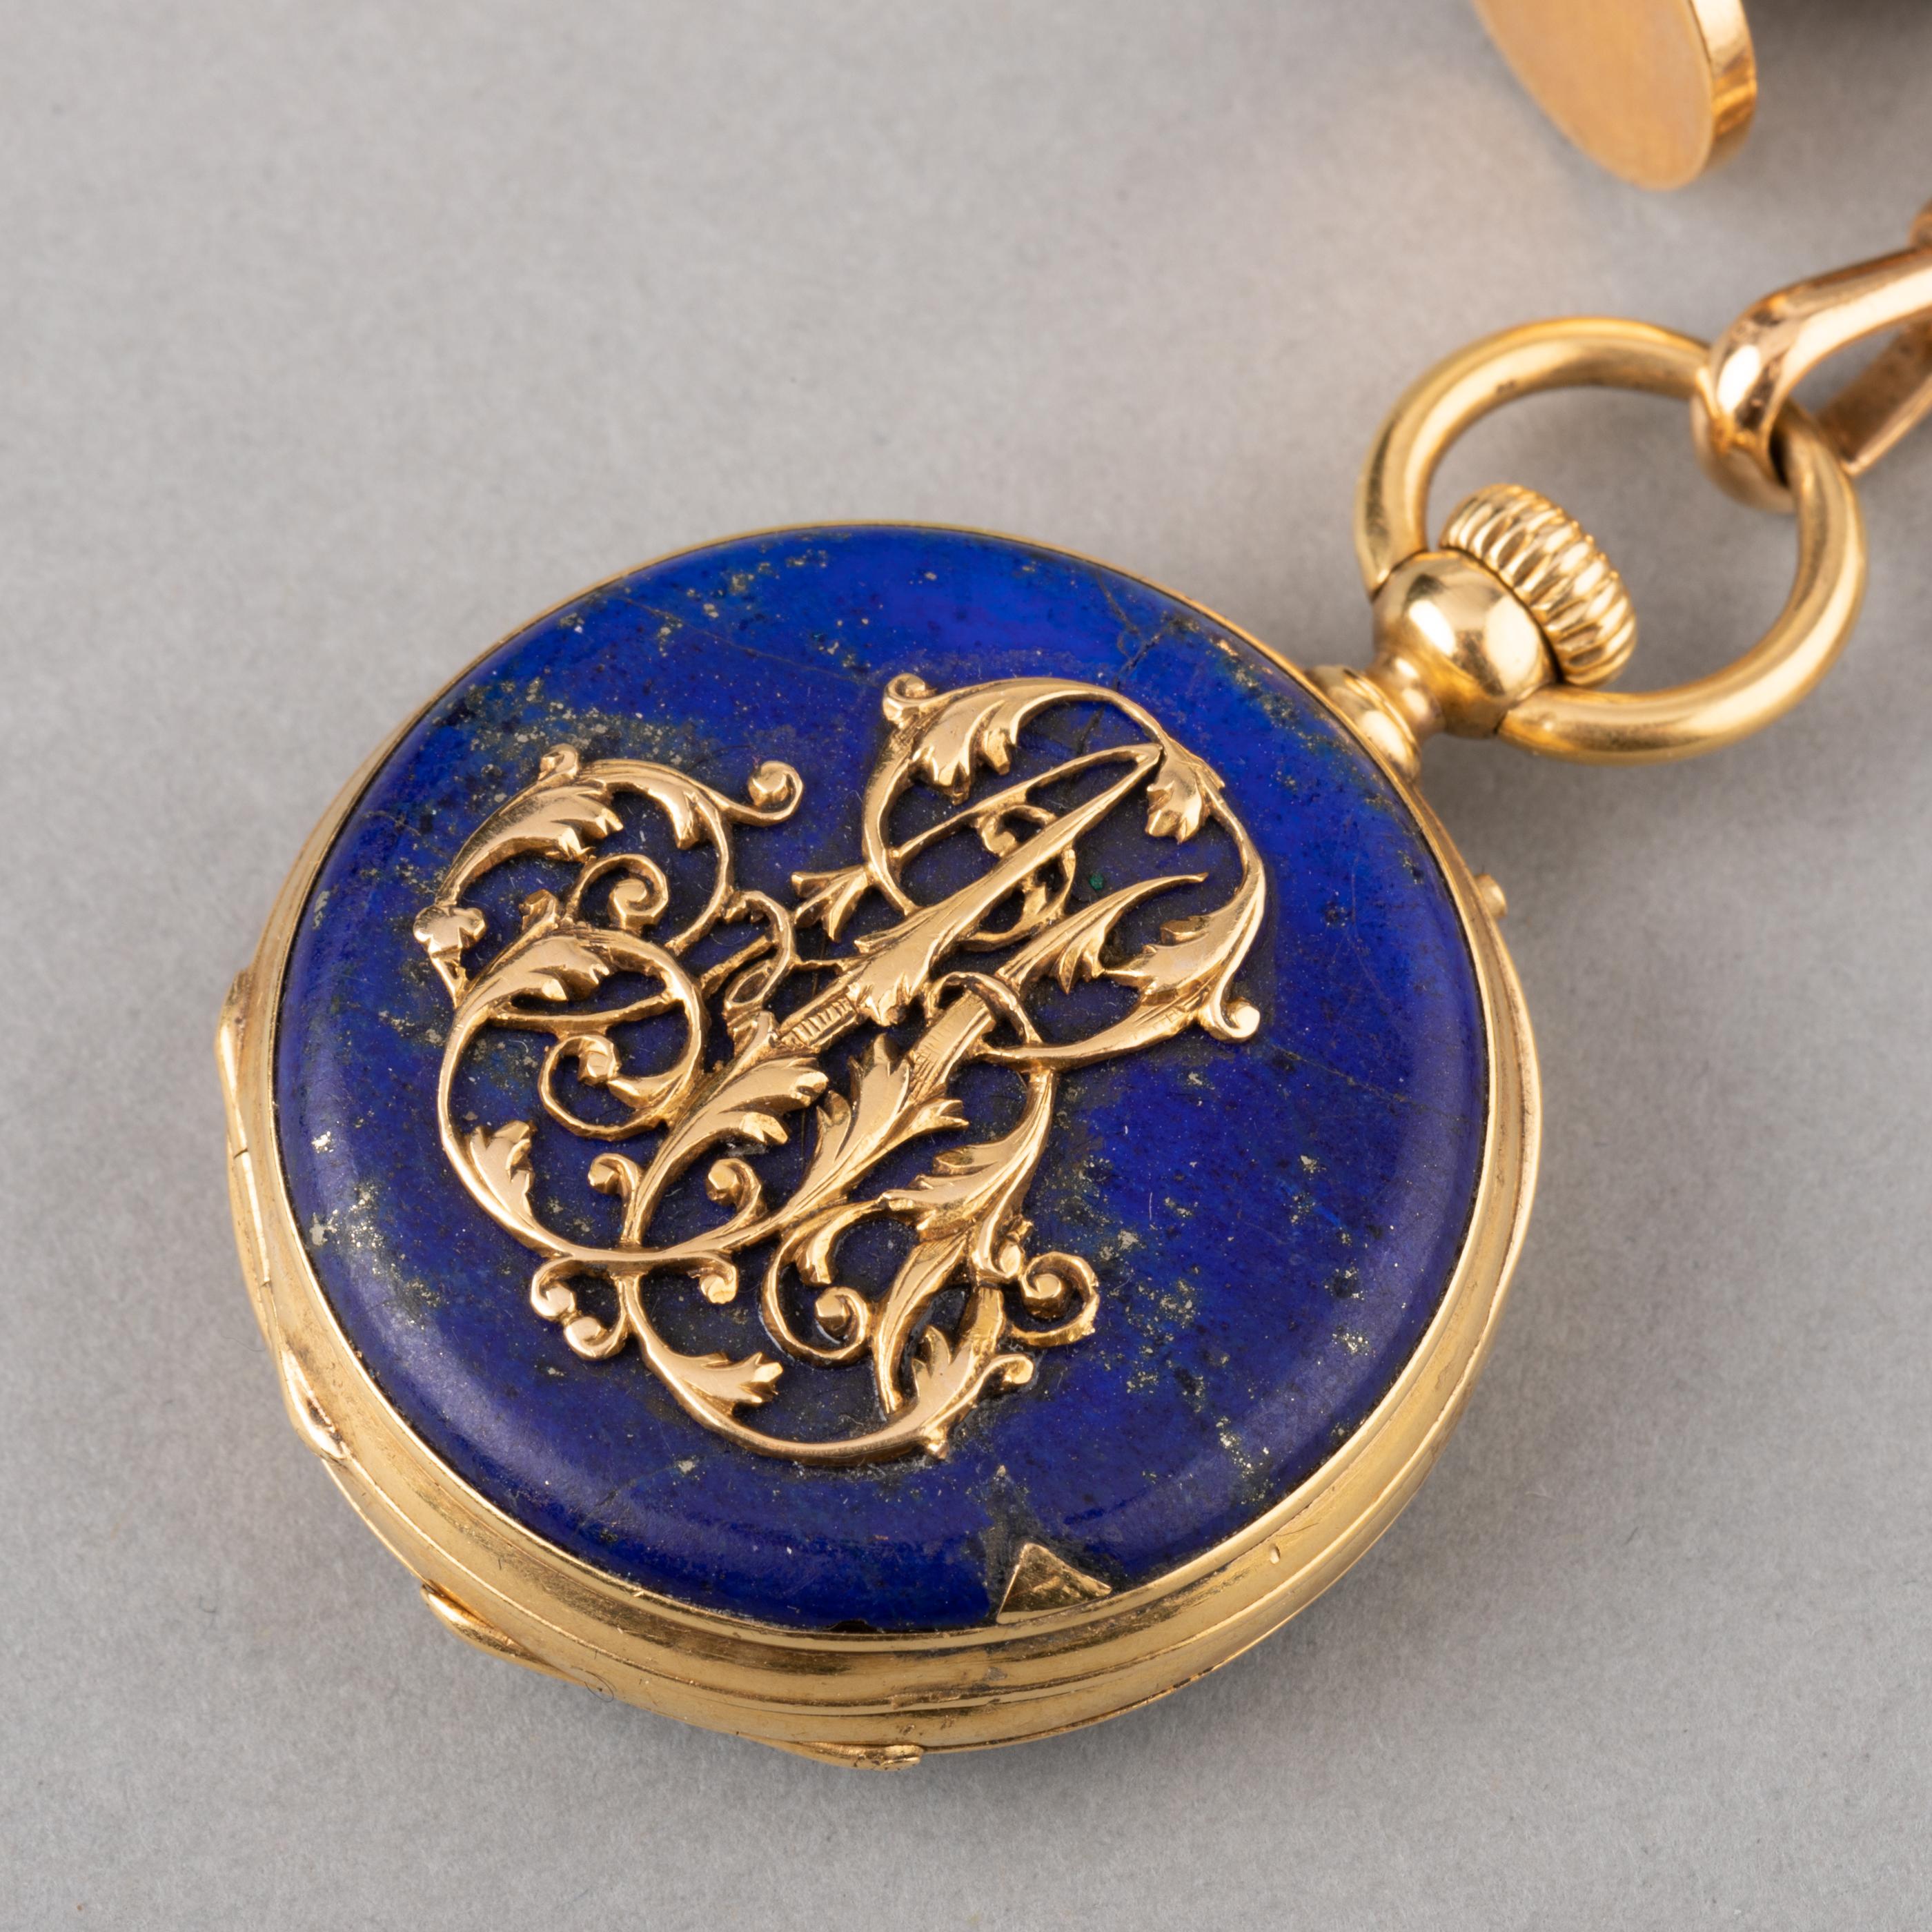 Napoleon III Gold and Lapis Lazuli Antique Châtelaine Brooch by Le Roy & Fils Paris